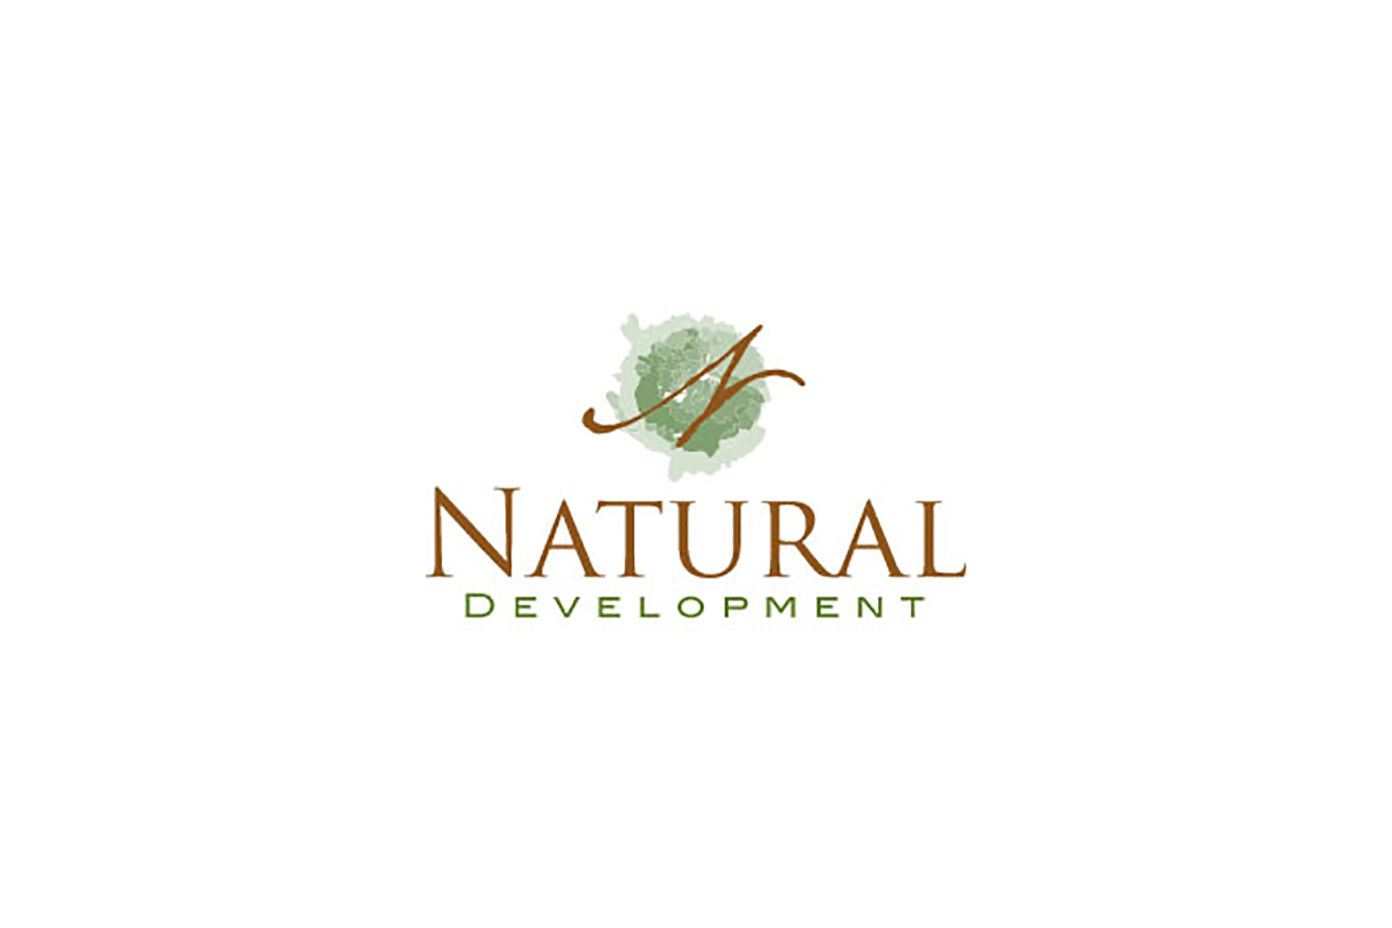 Natural Development Logo Image